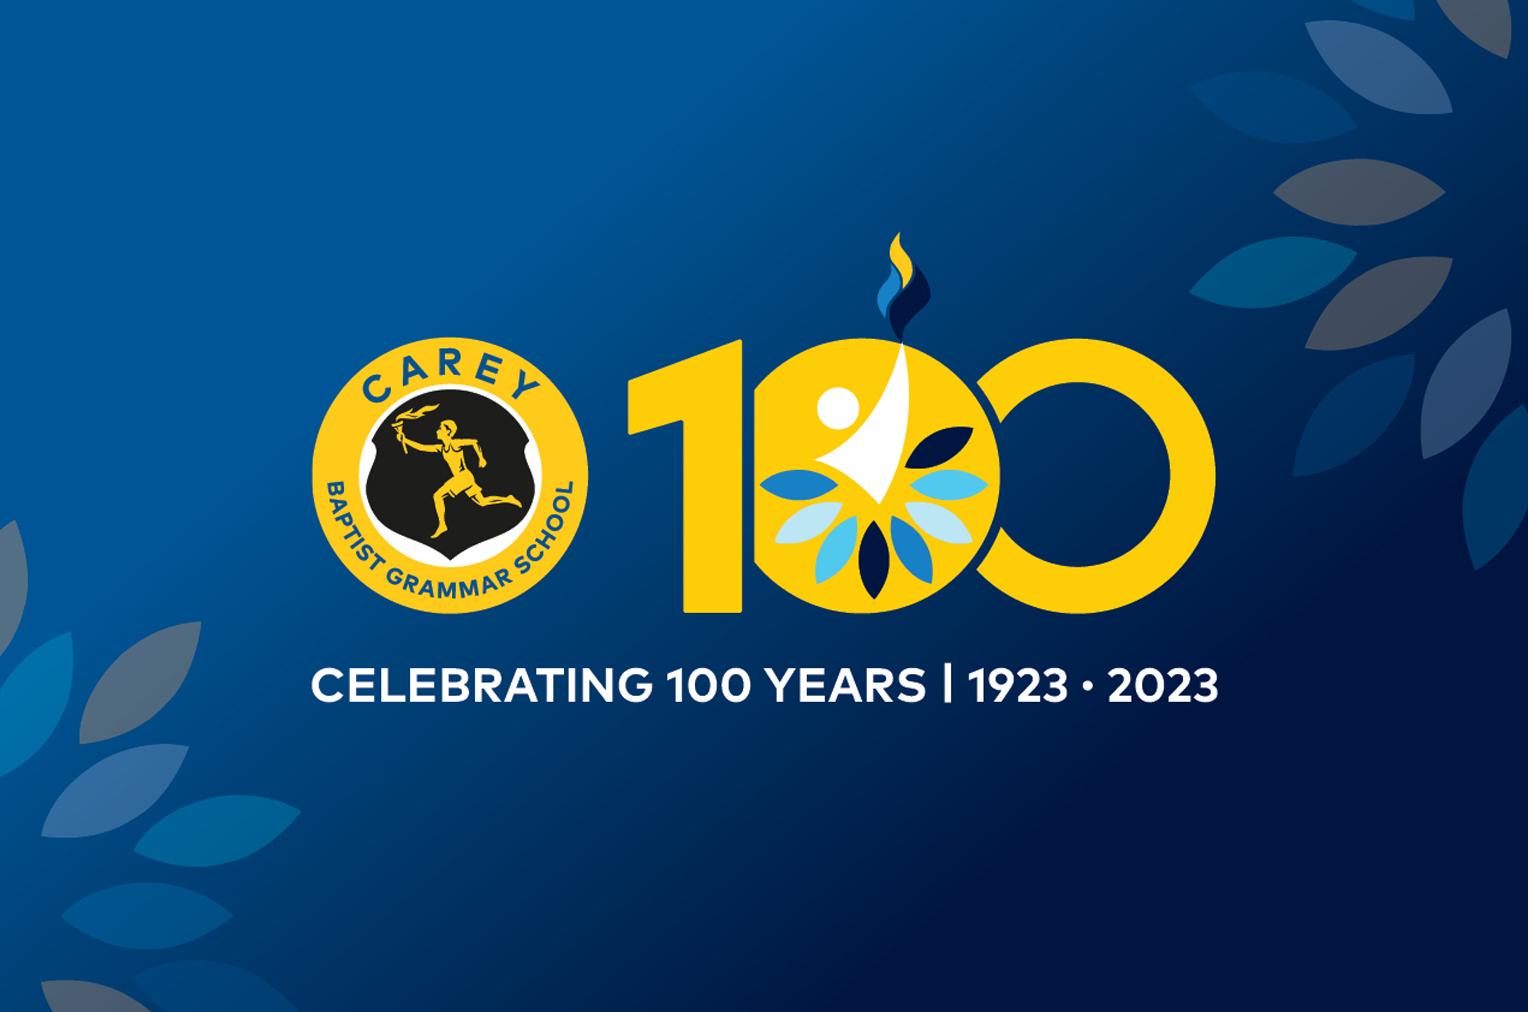 Centenary celebrated